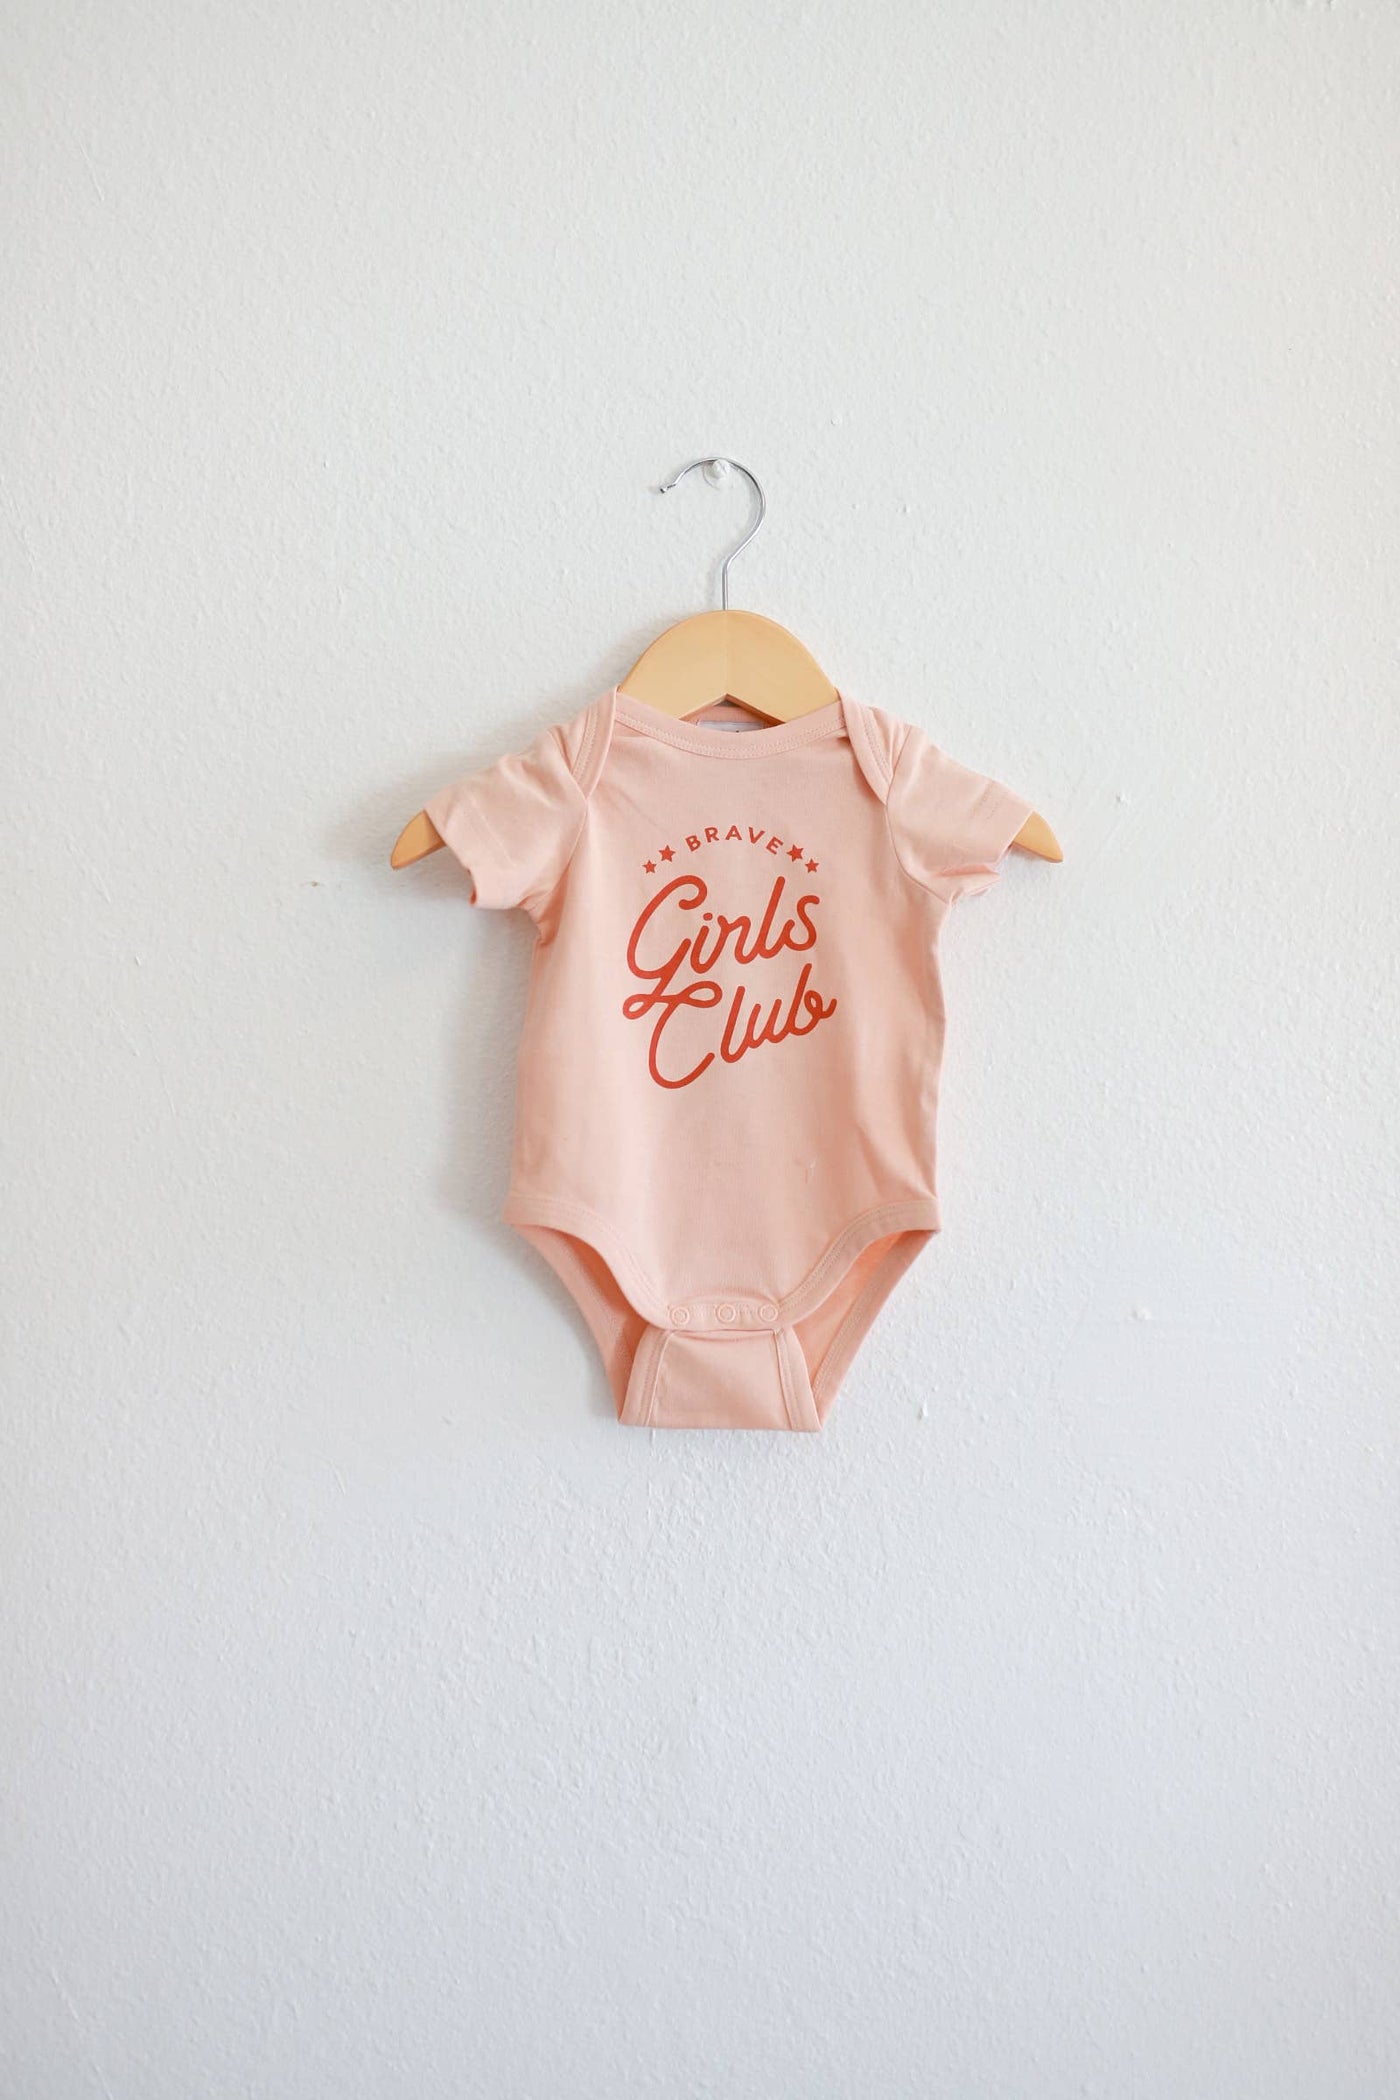 Brave Girls Club Baby Onesie, Baby Bodysuit, Baby Gift - 12 Month